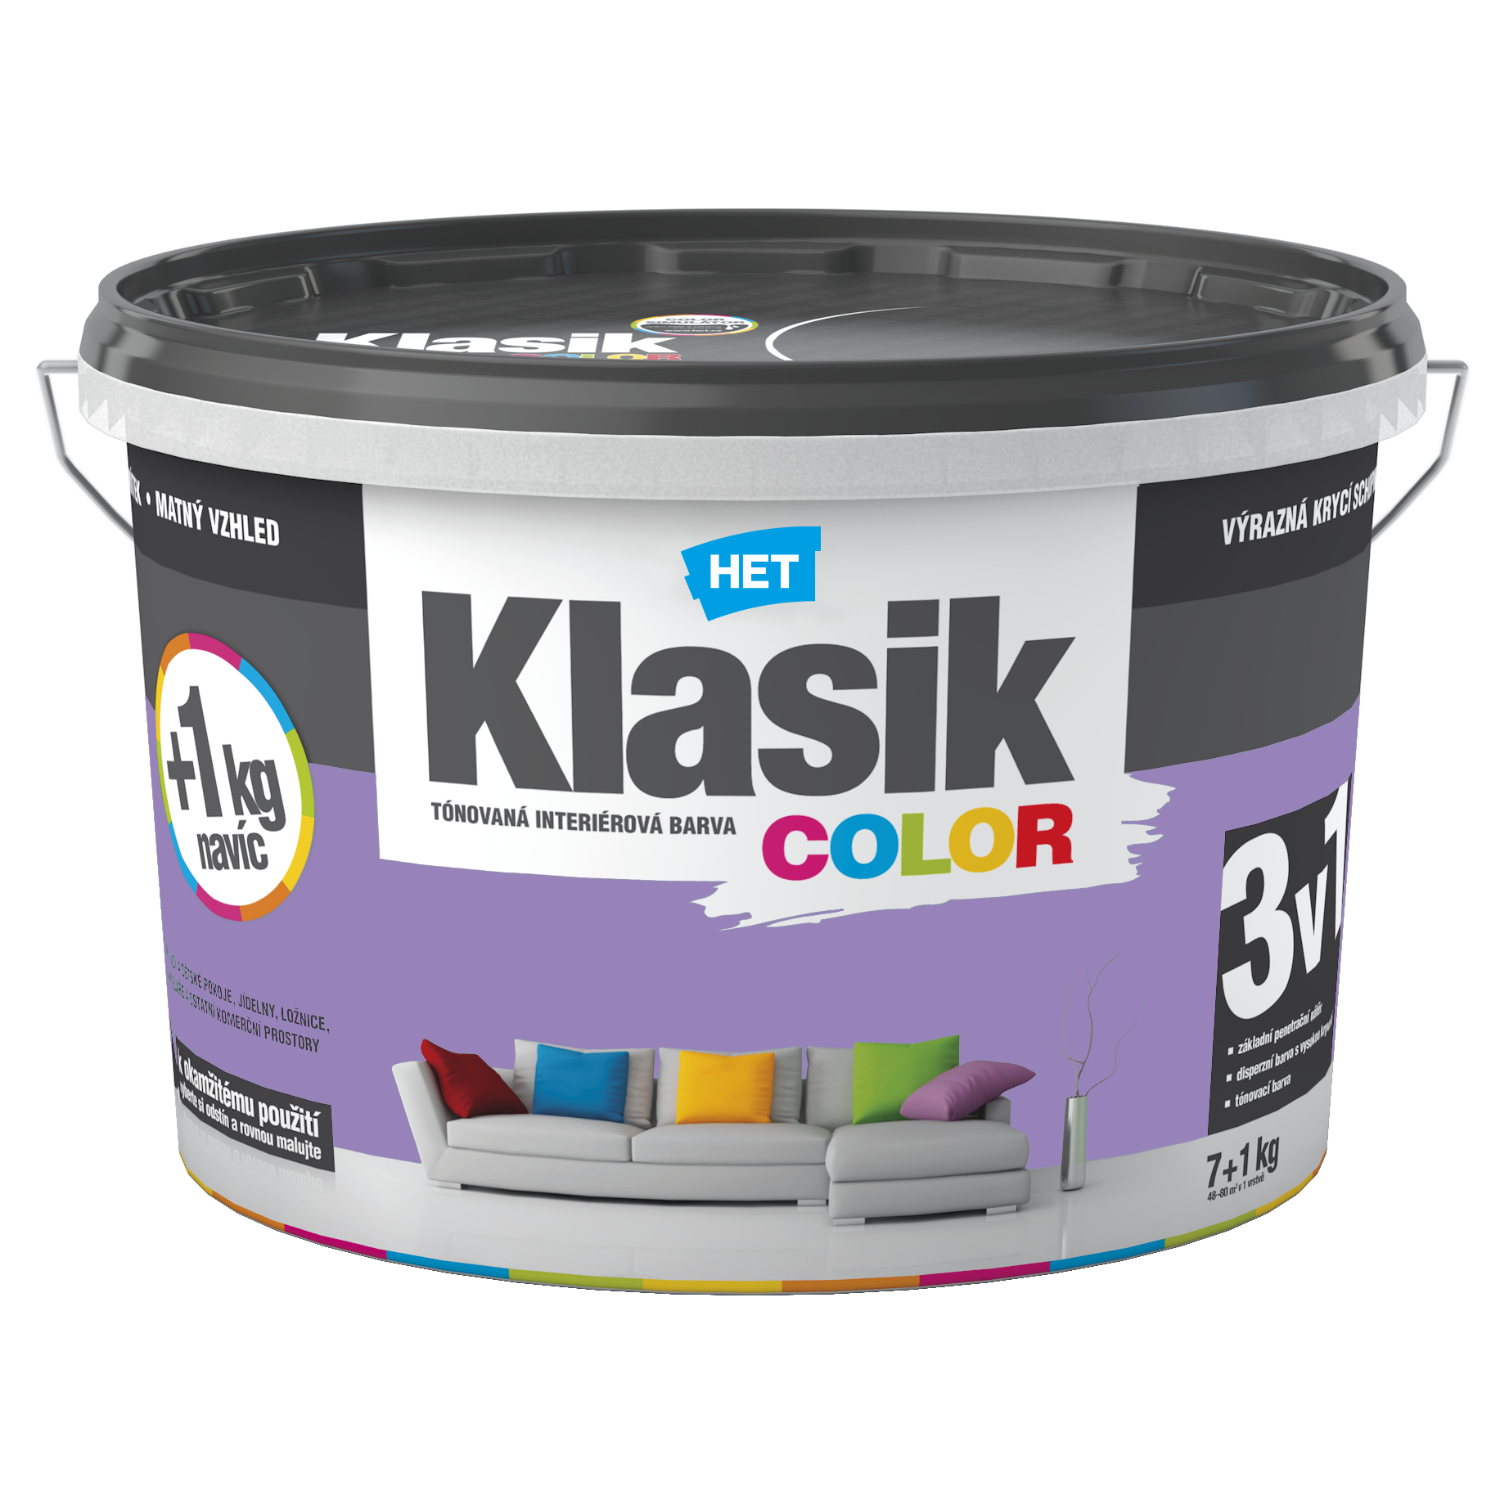 HET Klasik COLOR tónovaná interiérová akrylátová disperzná oteruvzdorná farba 7 kg + 1 kg zdarma, KC0327 - fialový lila